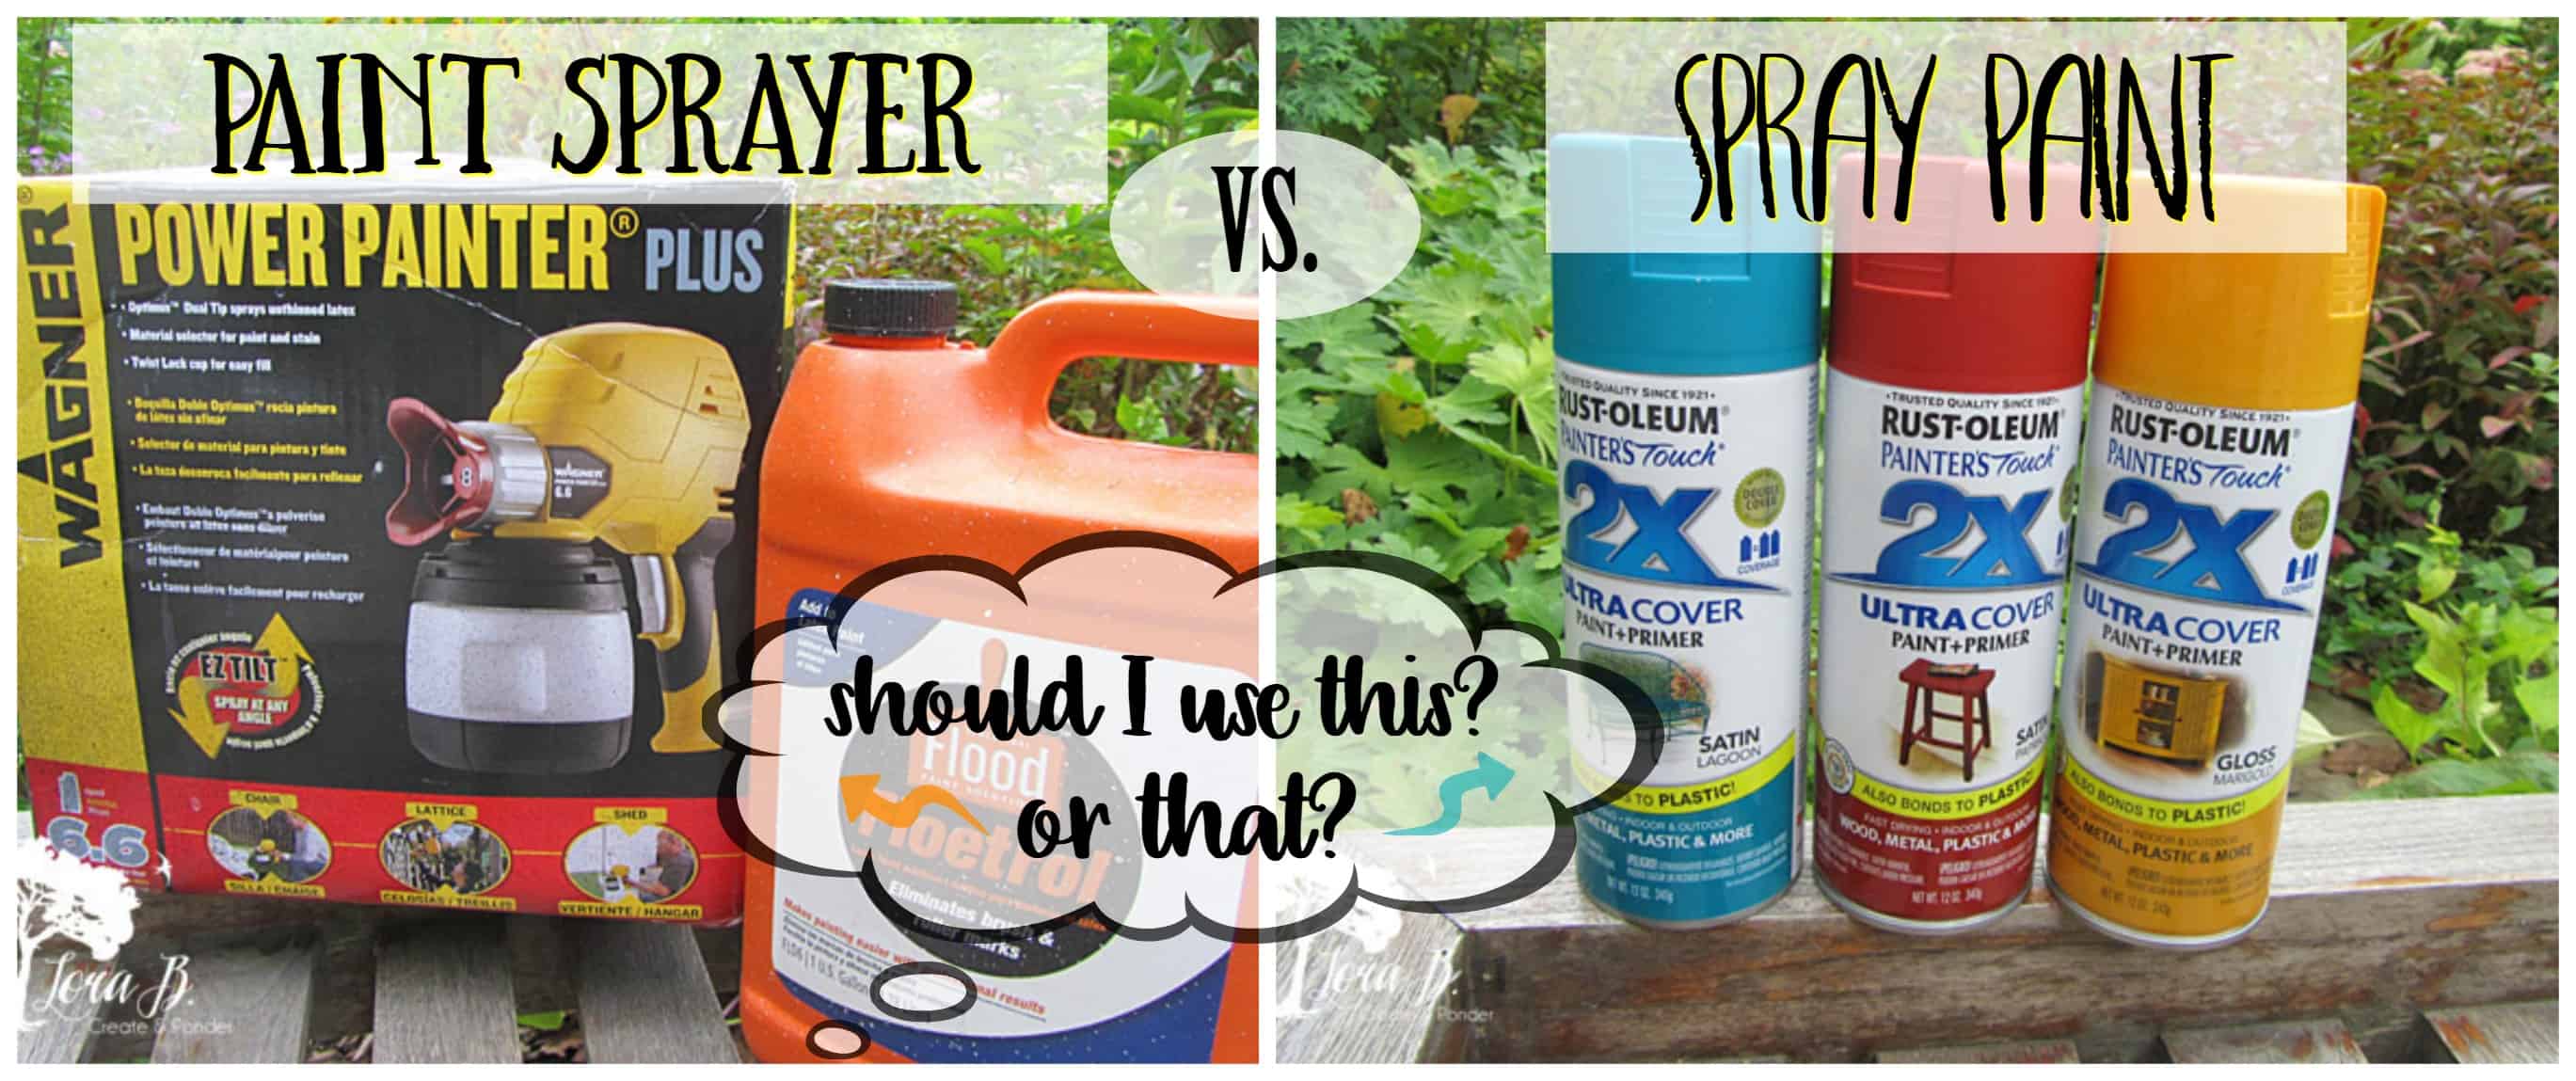 Paint Sprayer vs. Spray Paint